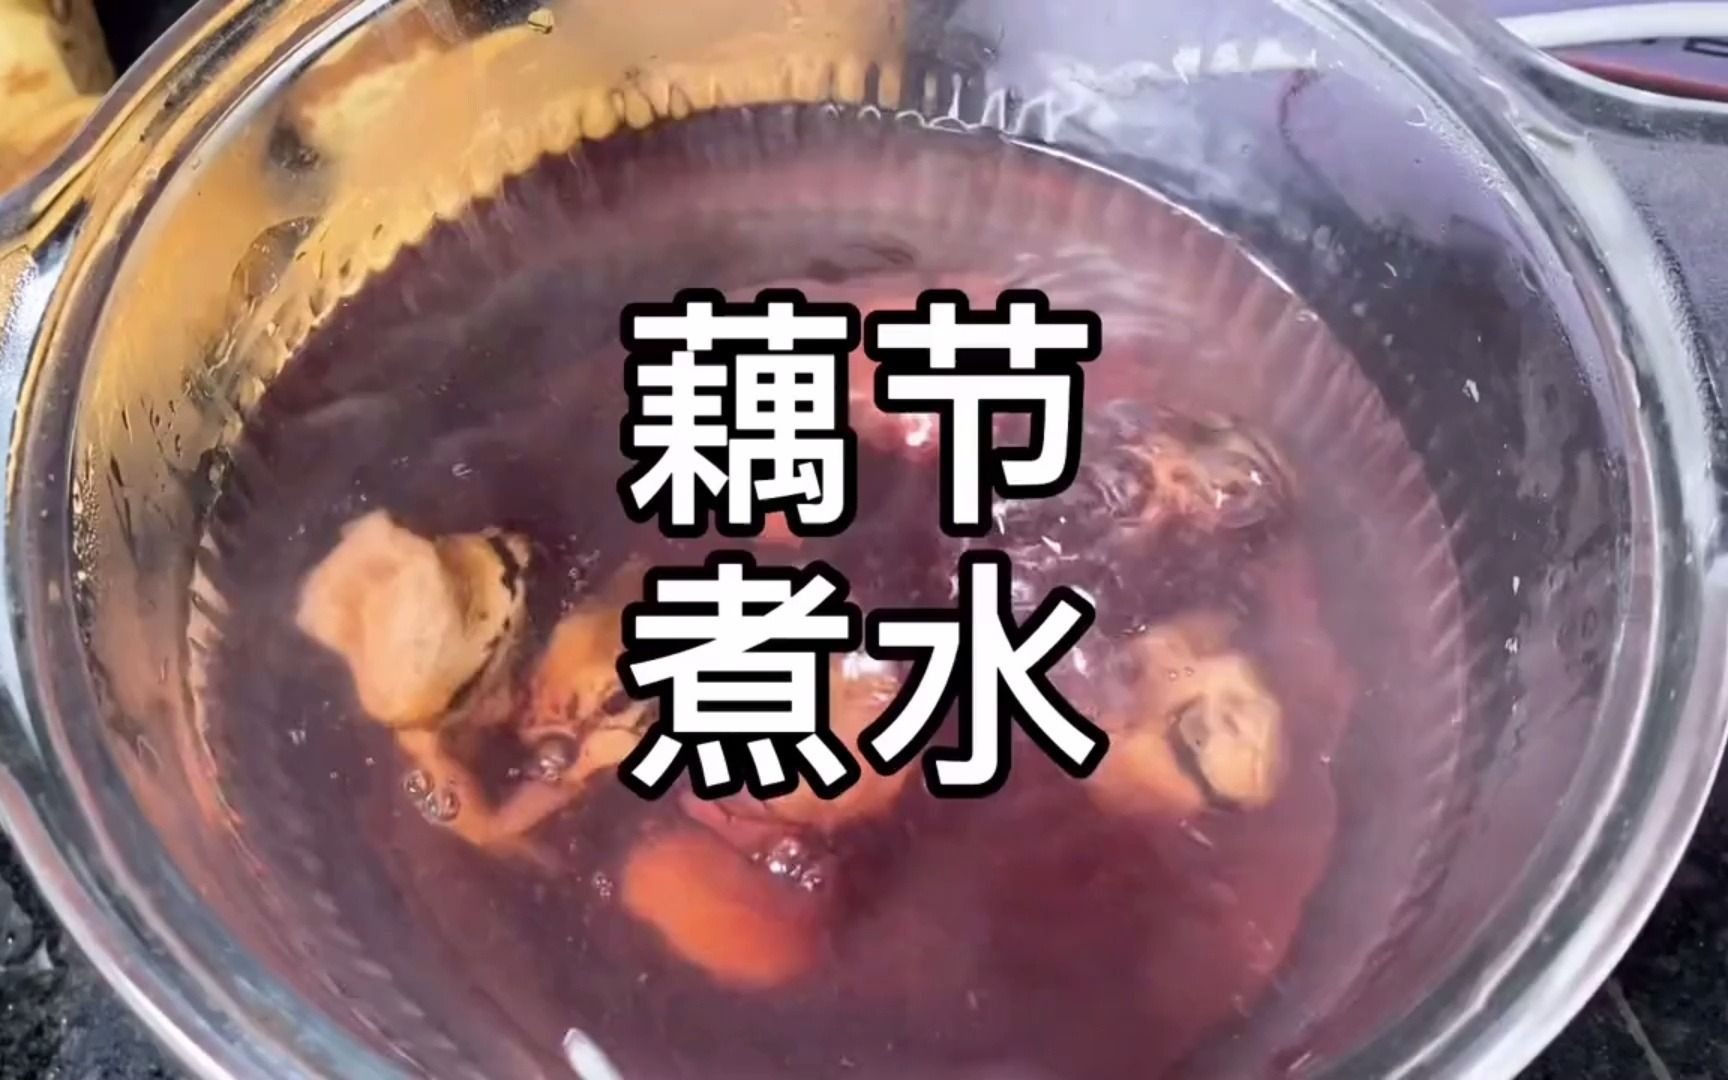 粉丝分享一道糯米莲藕做法 煮了一半没煤气了_哔哩哔哩 (゜-゜)つロ 干杯~-bilibili